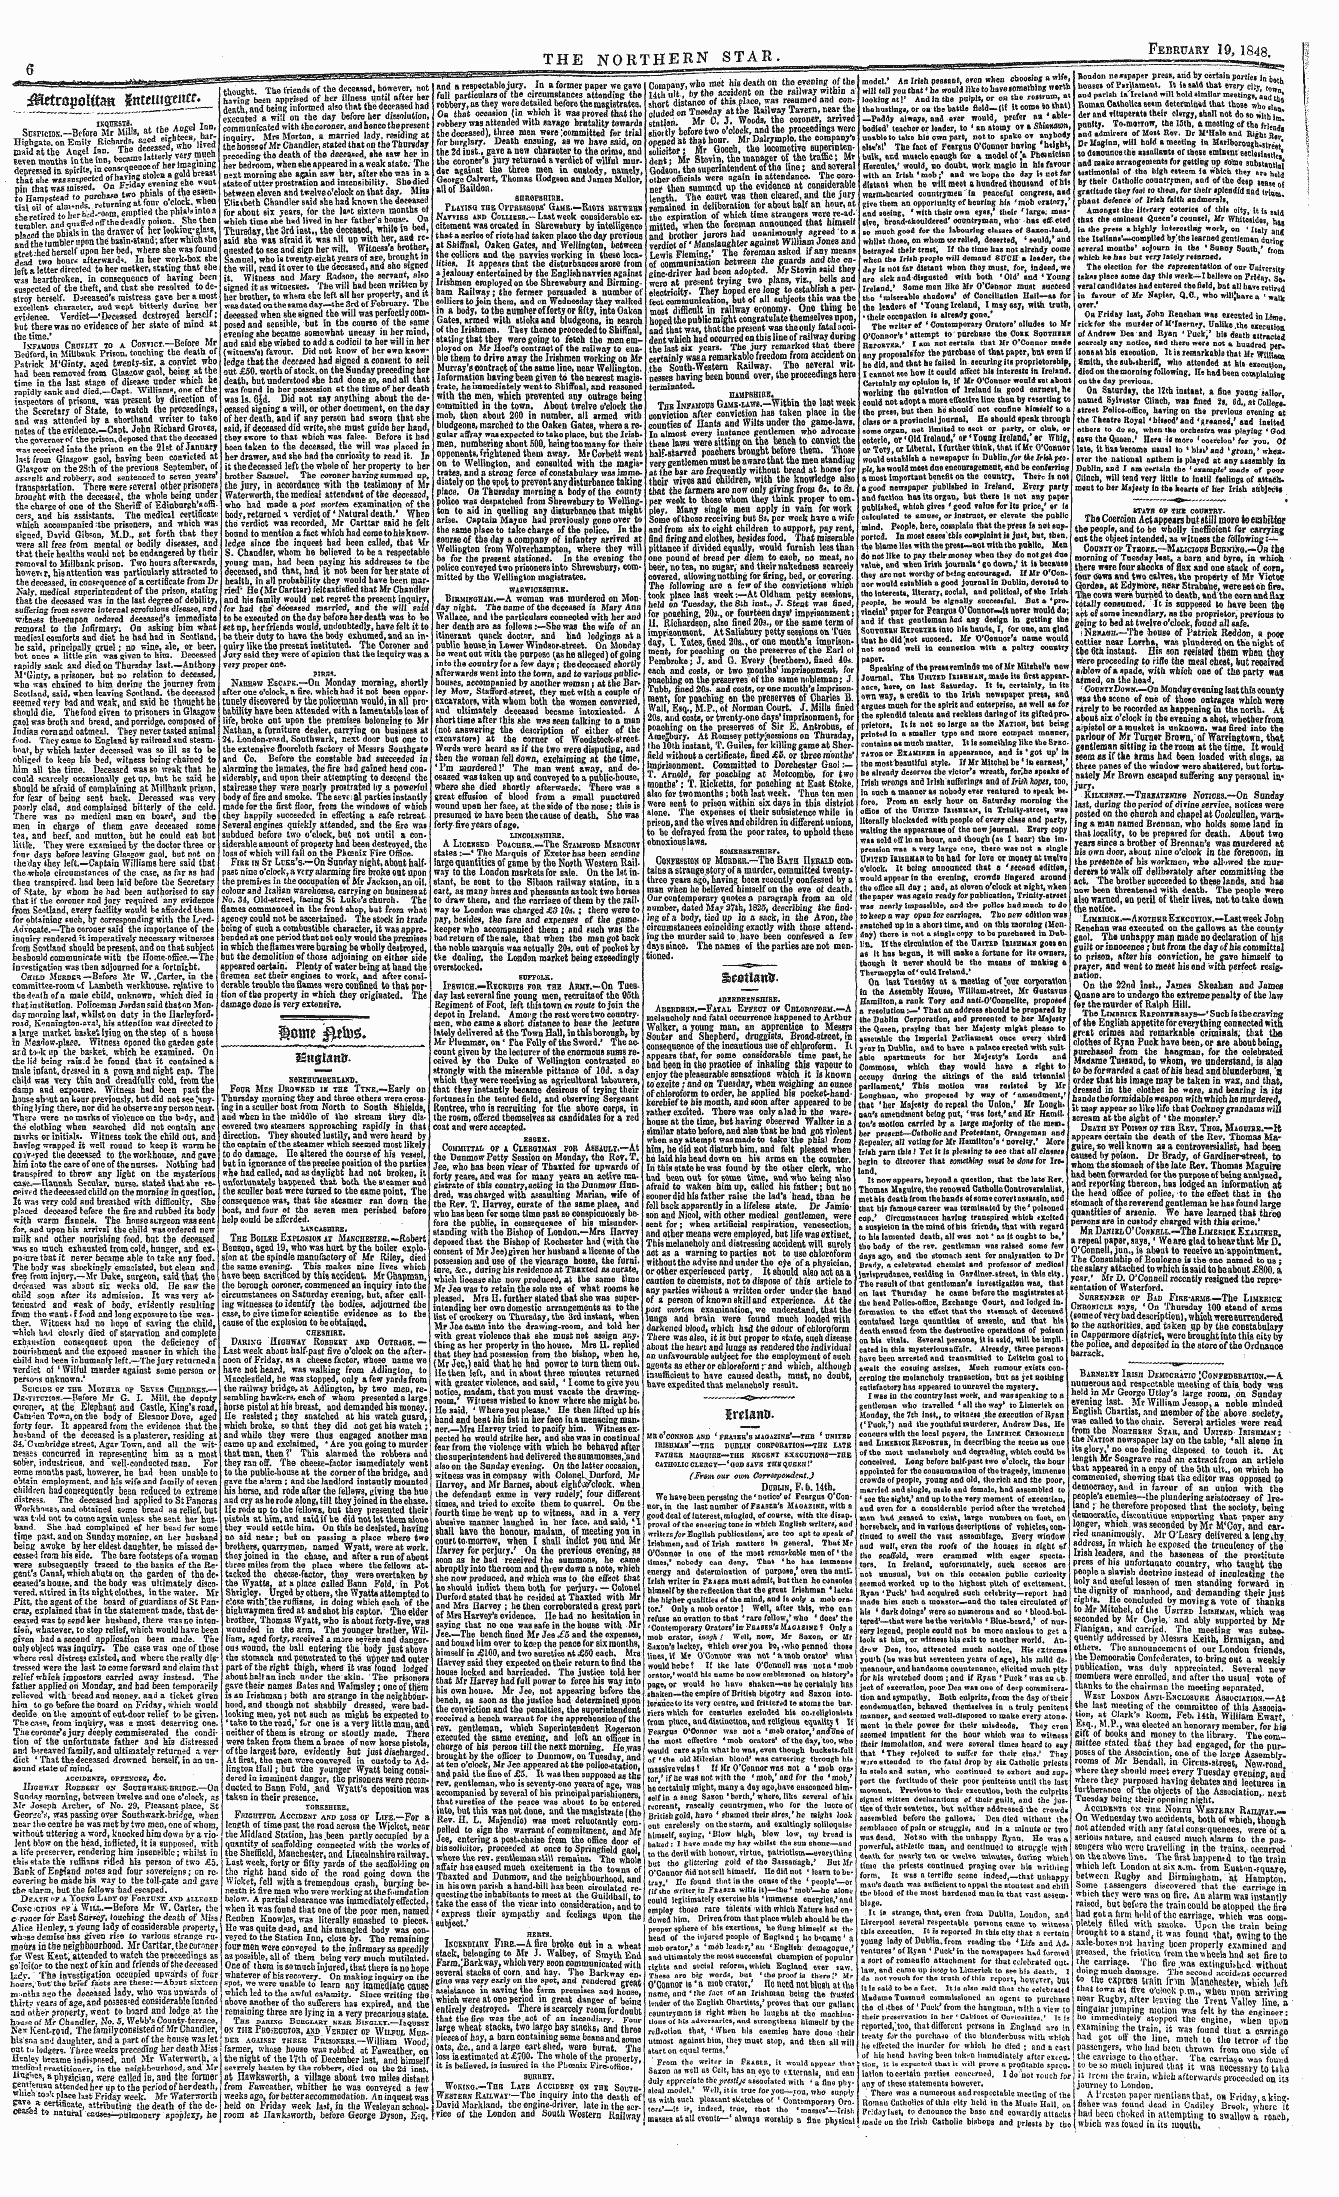 Northern Star (1837-1852): jS F Y, 3rd edition - Mro'connob And ' Fbassr's Magazine— Thb ...